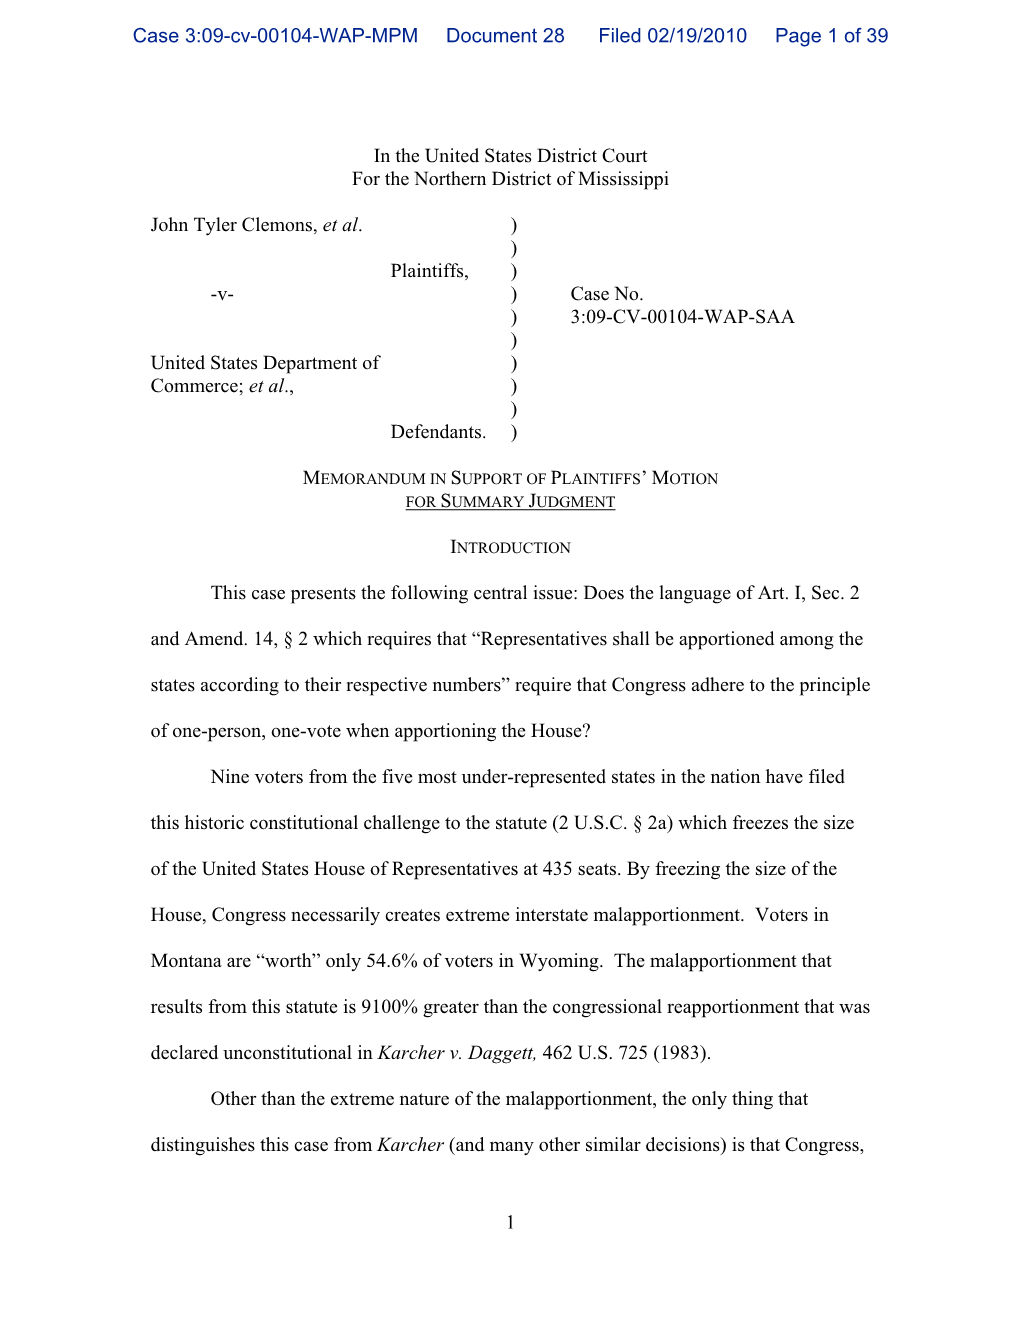 Case 3:09-Cv-00104-WAP-MPM Document 28 Filed 02/19/2010 Page 1 of 39